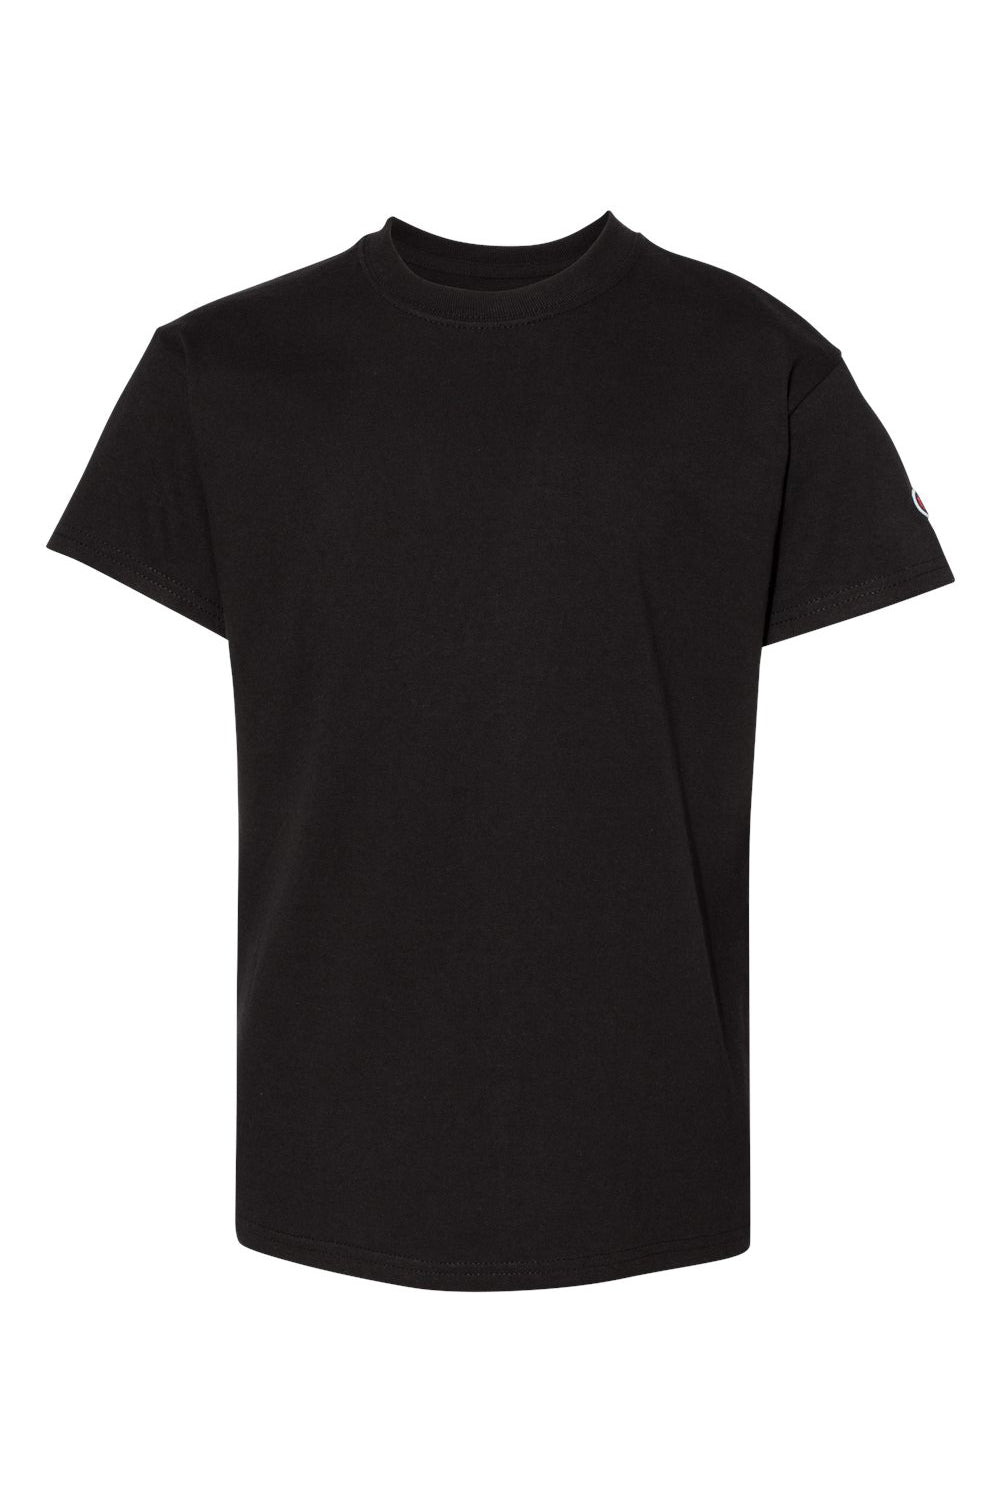 Champion T435 Youth Short Sleeve Crewneck T-Shirt Black Flat Front